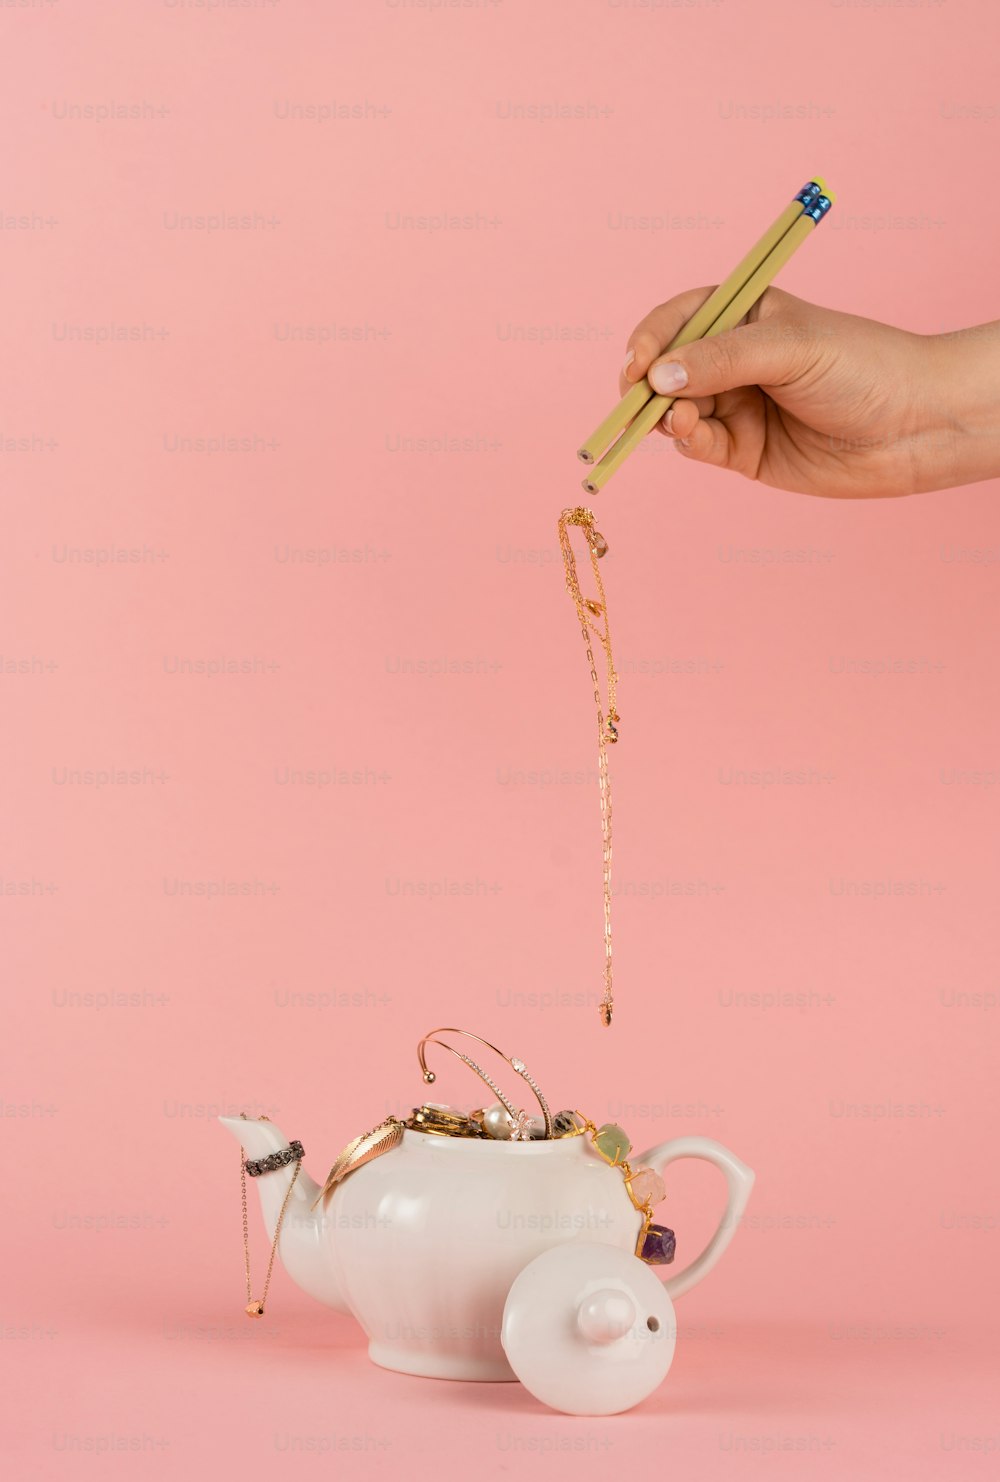 a person holding a pair of chopsticks above a teapot